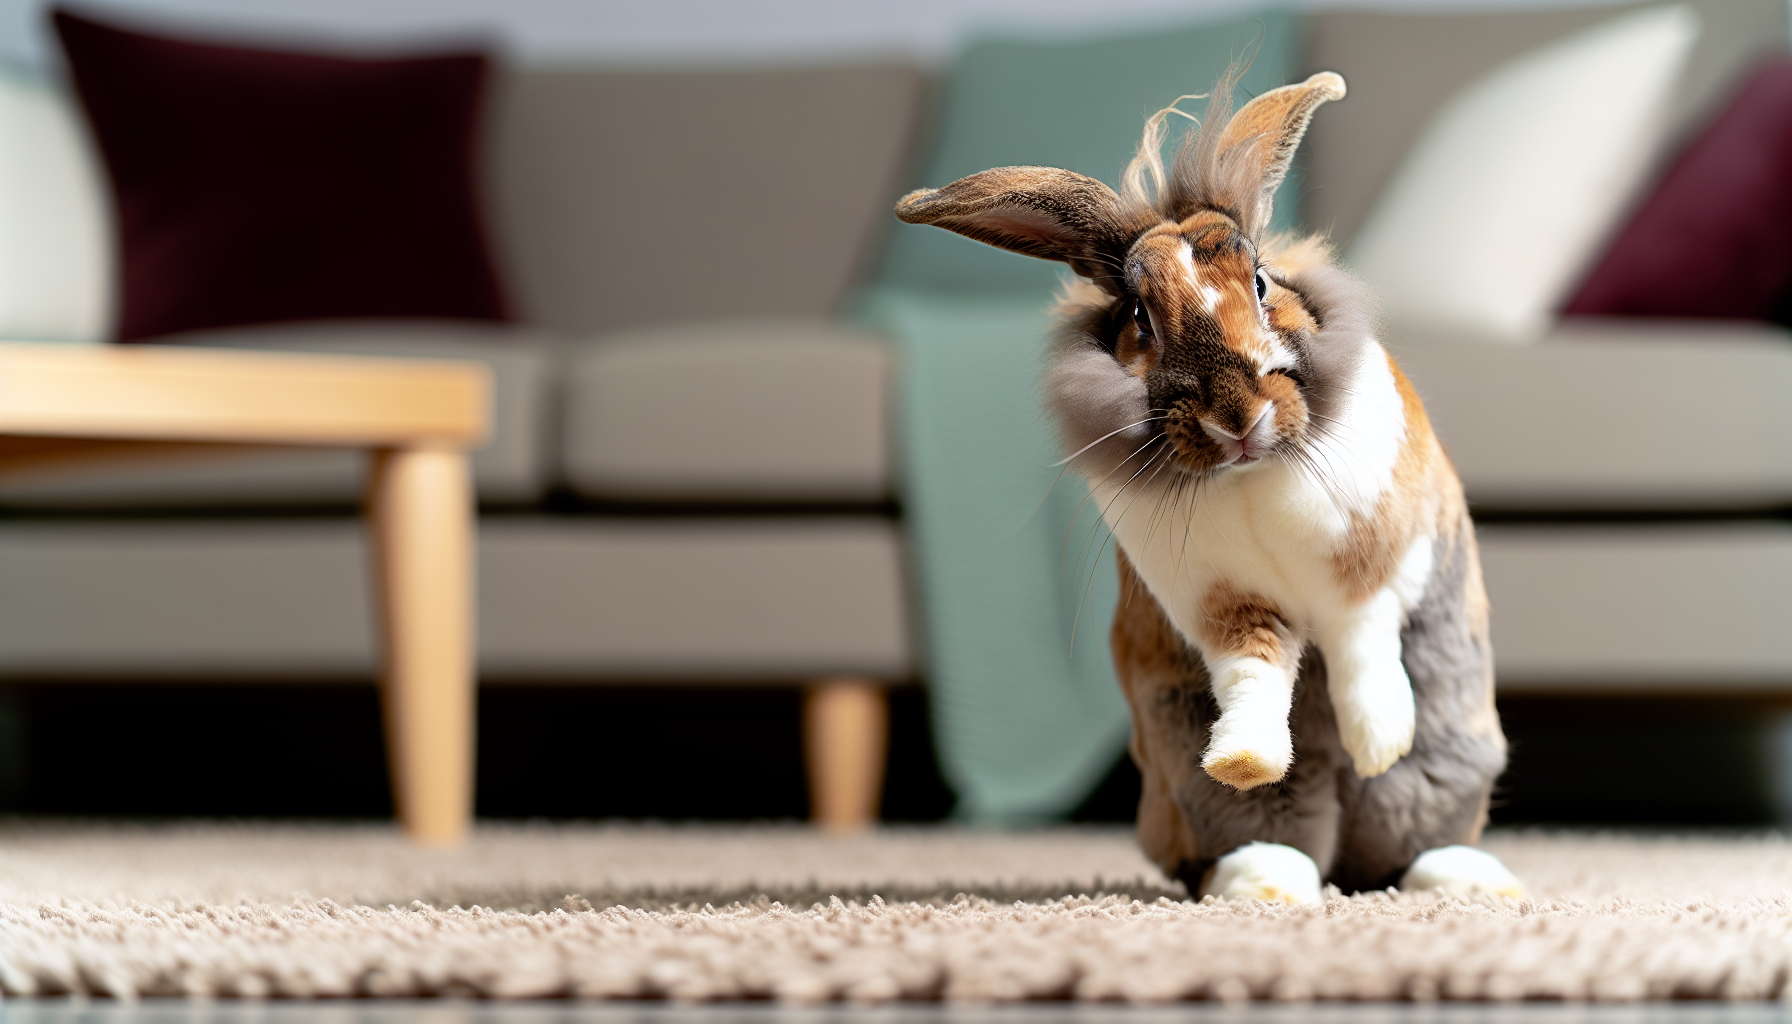 Photo of a rabbit exhibiting aggressive behavior